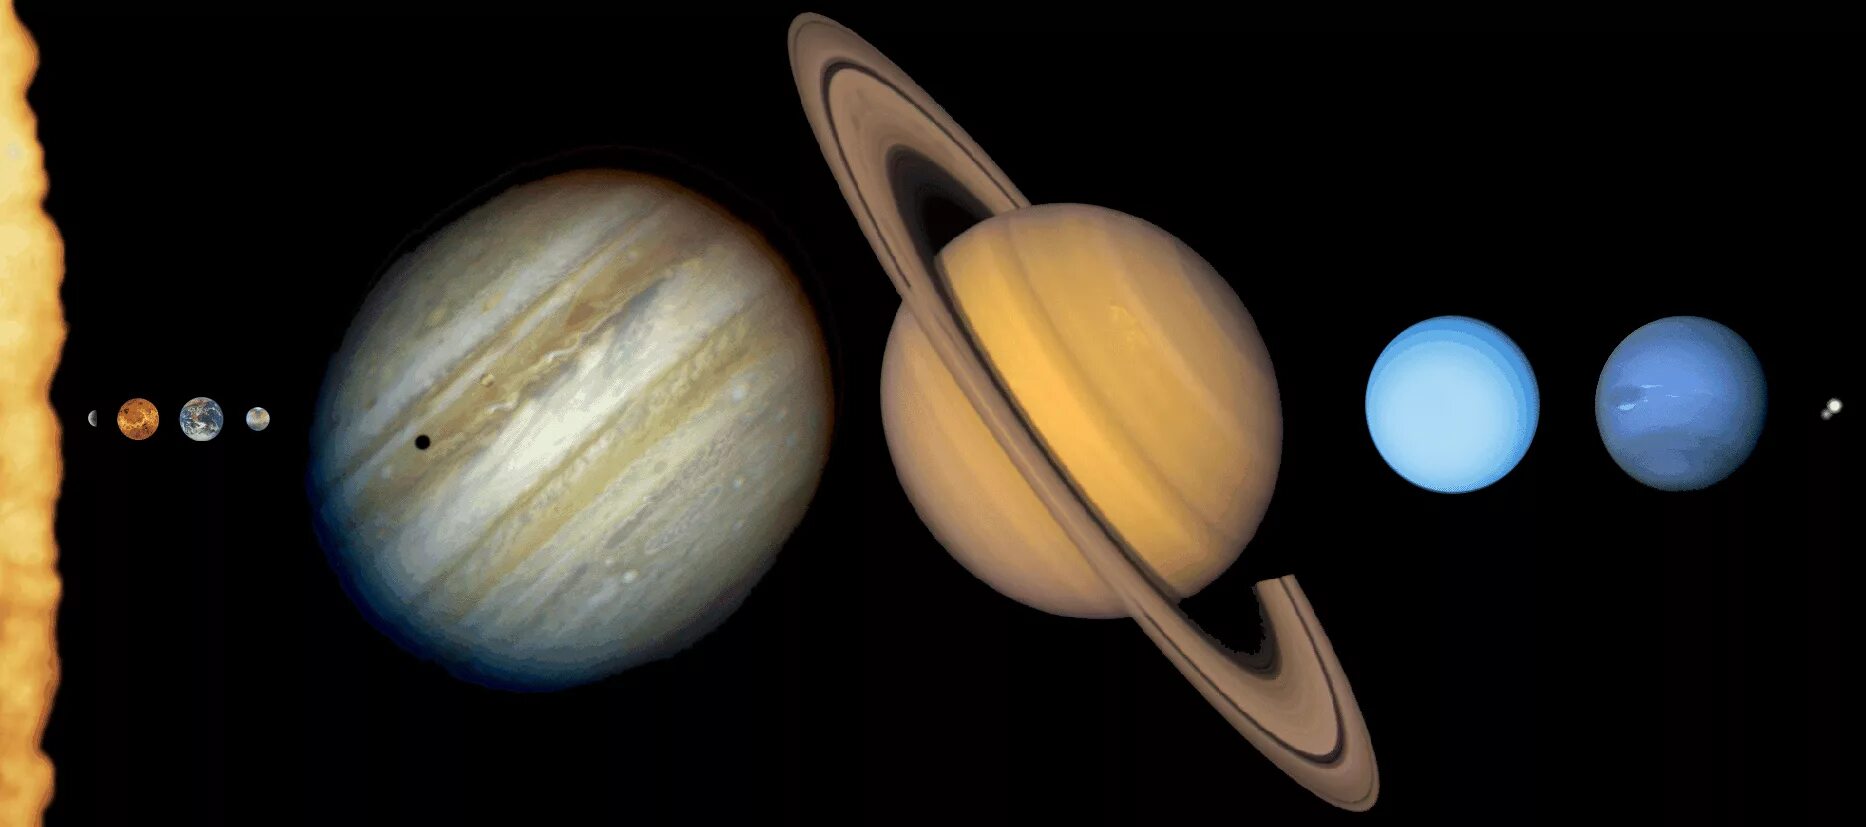 Снимки Сатурна Вояджер. Планеты гиганты Юпитер Уран. Земля Нептун Уран Сатурн Юпитер. Марс Юпитер Сатурн Уран Нептун. Юпитер соединение плутон